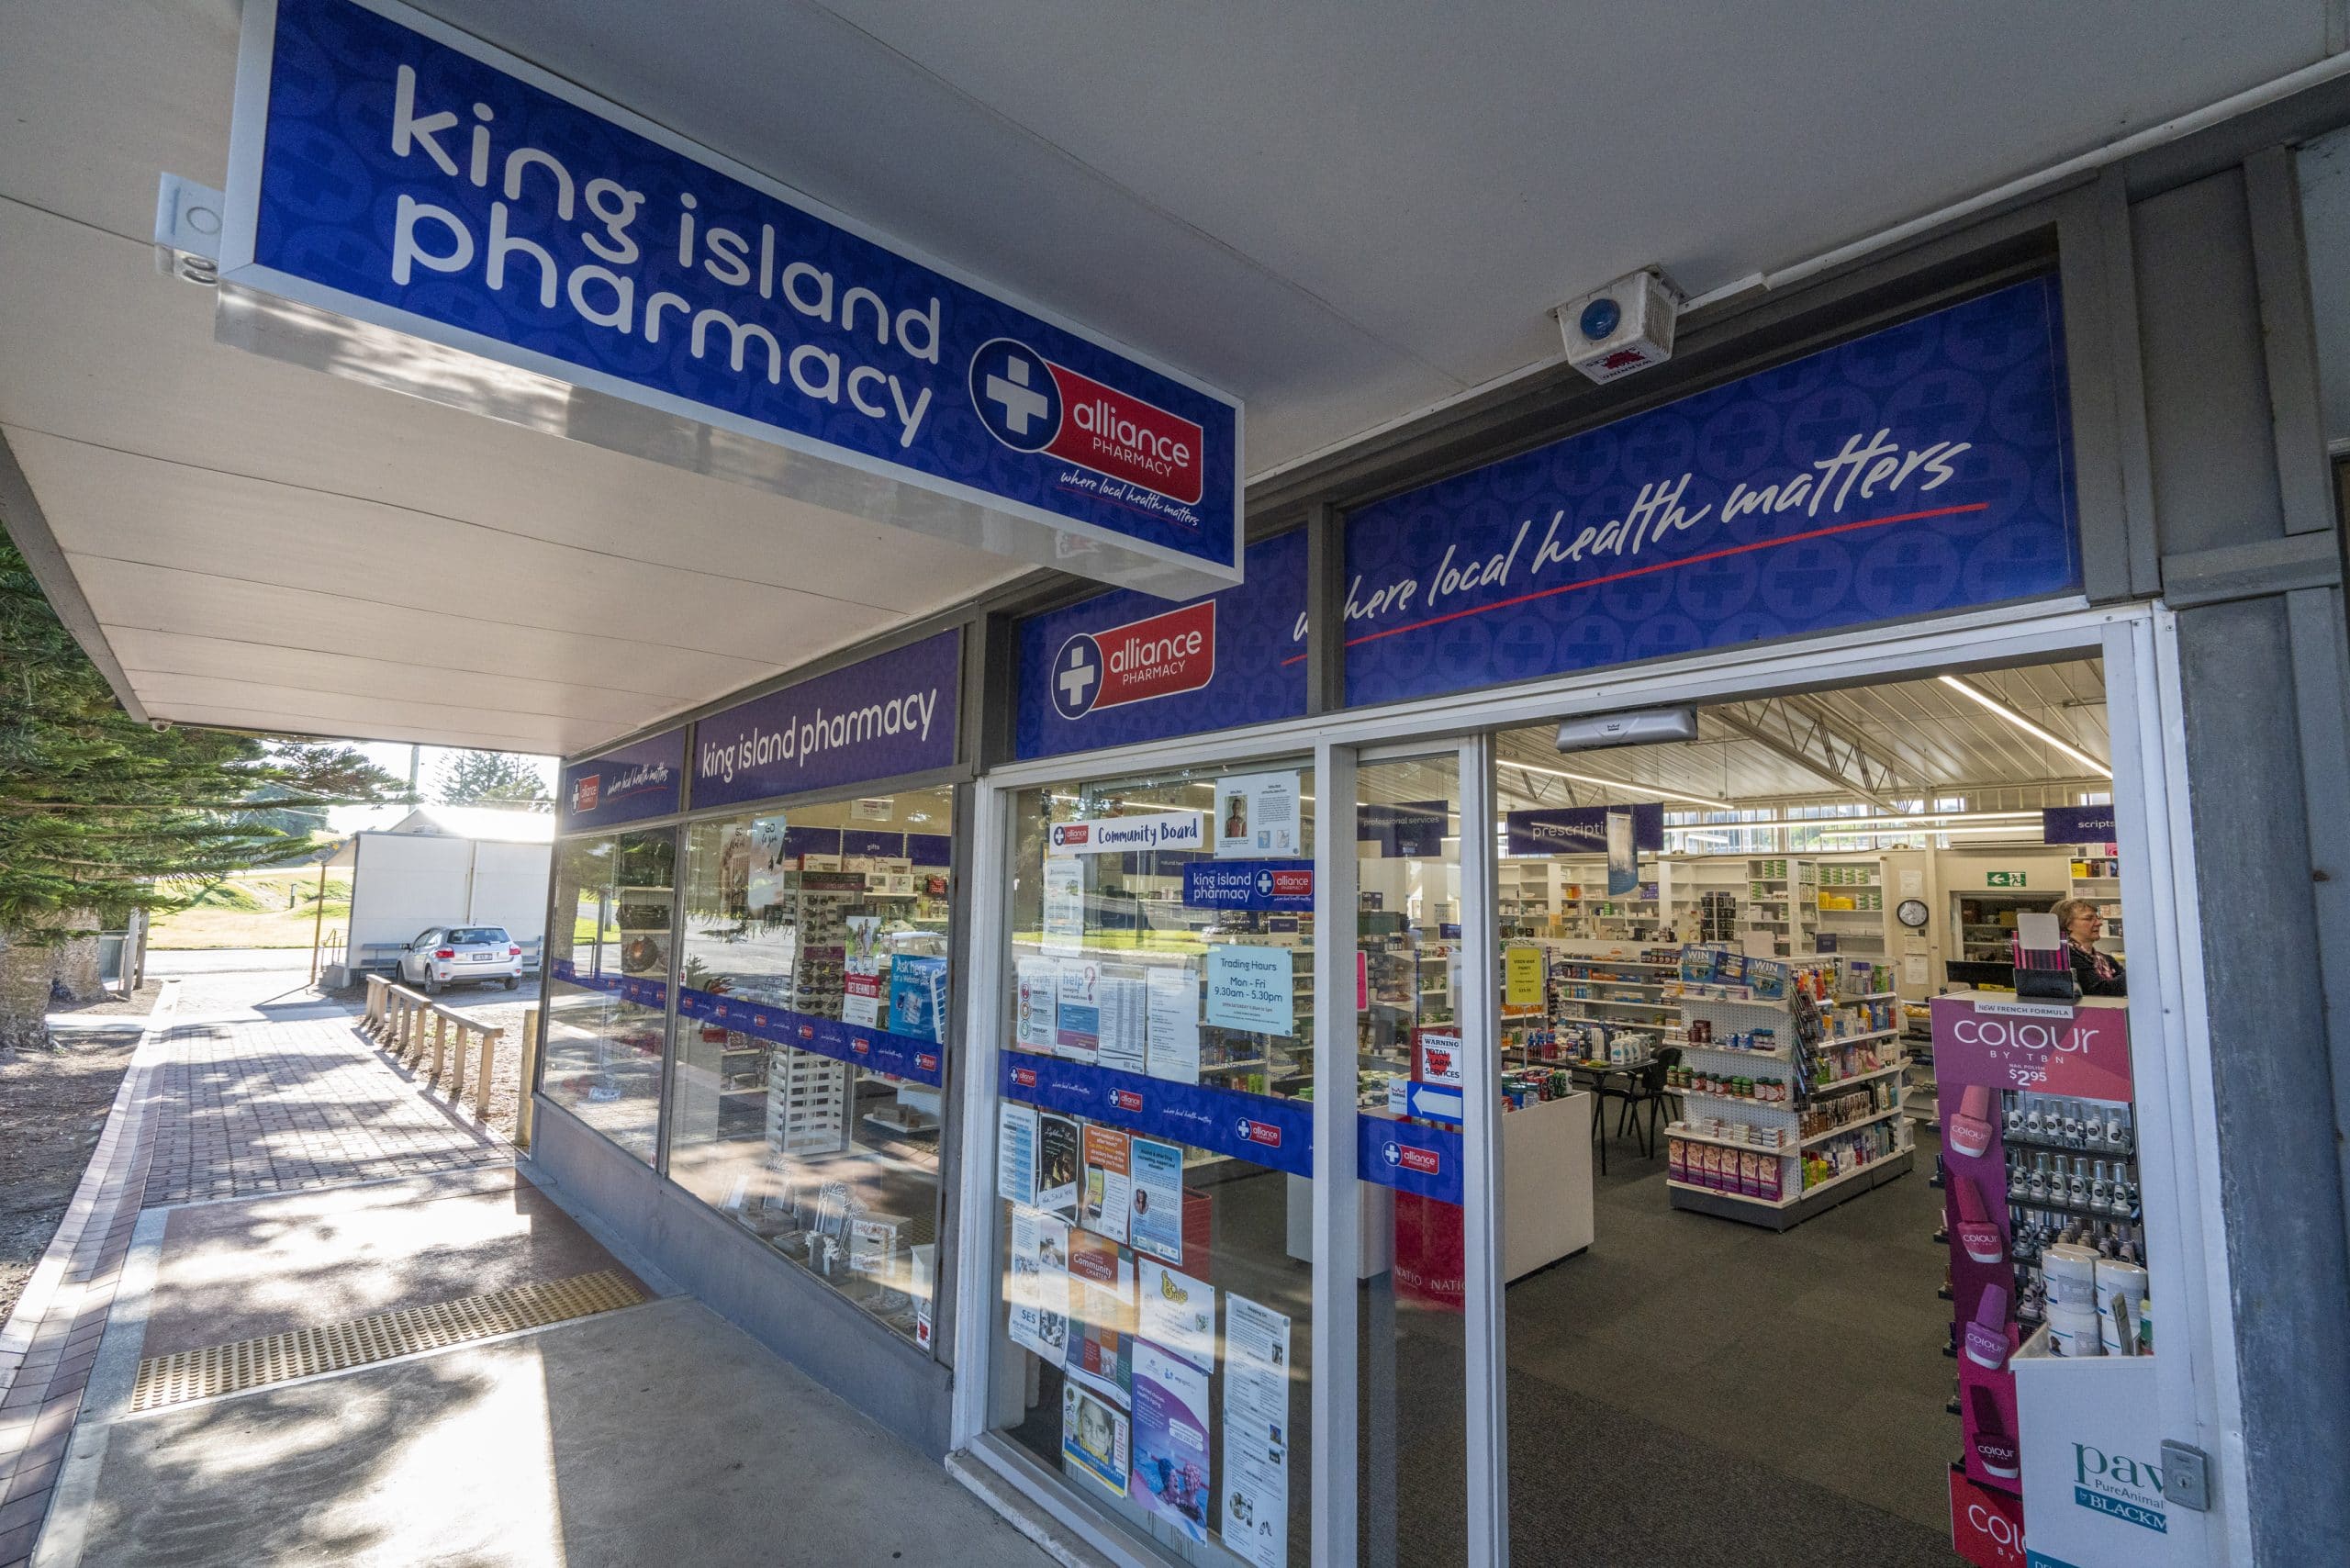 King Island Pharmacy